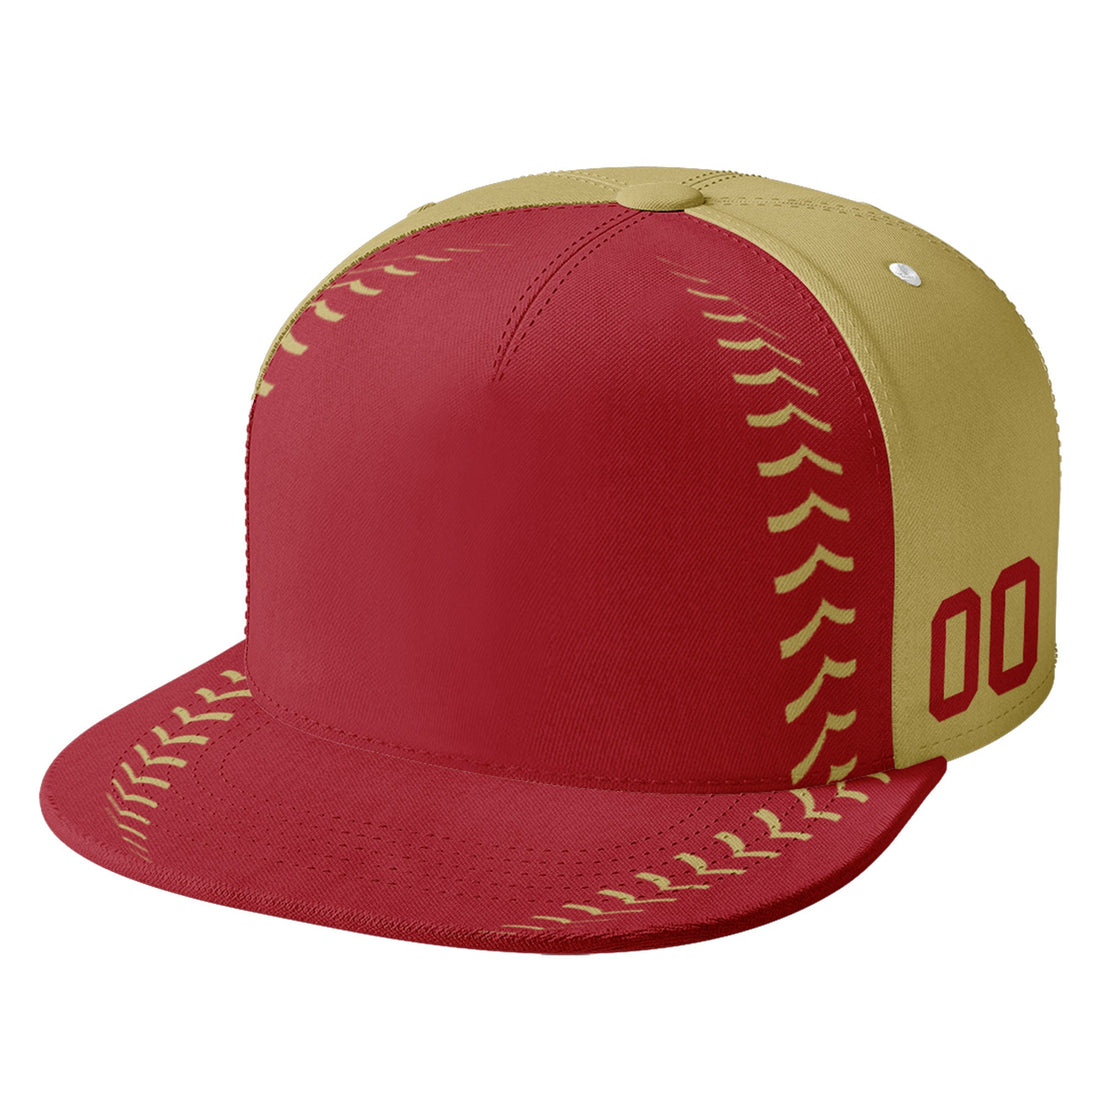 Custom Sport Design Hat Stitched Adjustable Snapback Personalized Baseball Cap PR067B-bd0b00d9-7